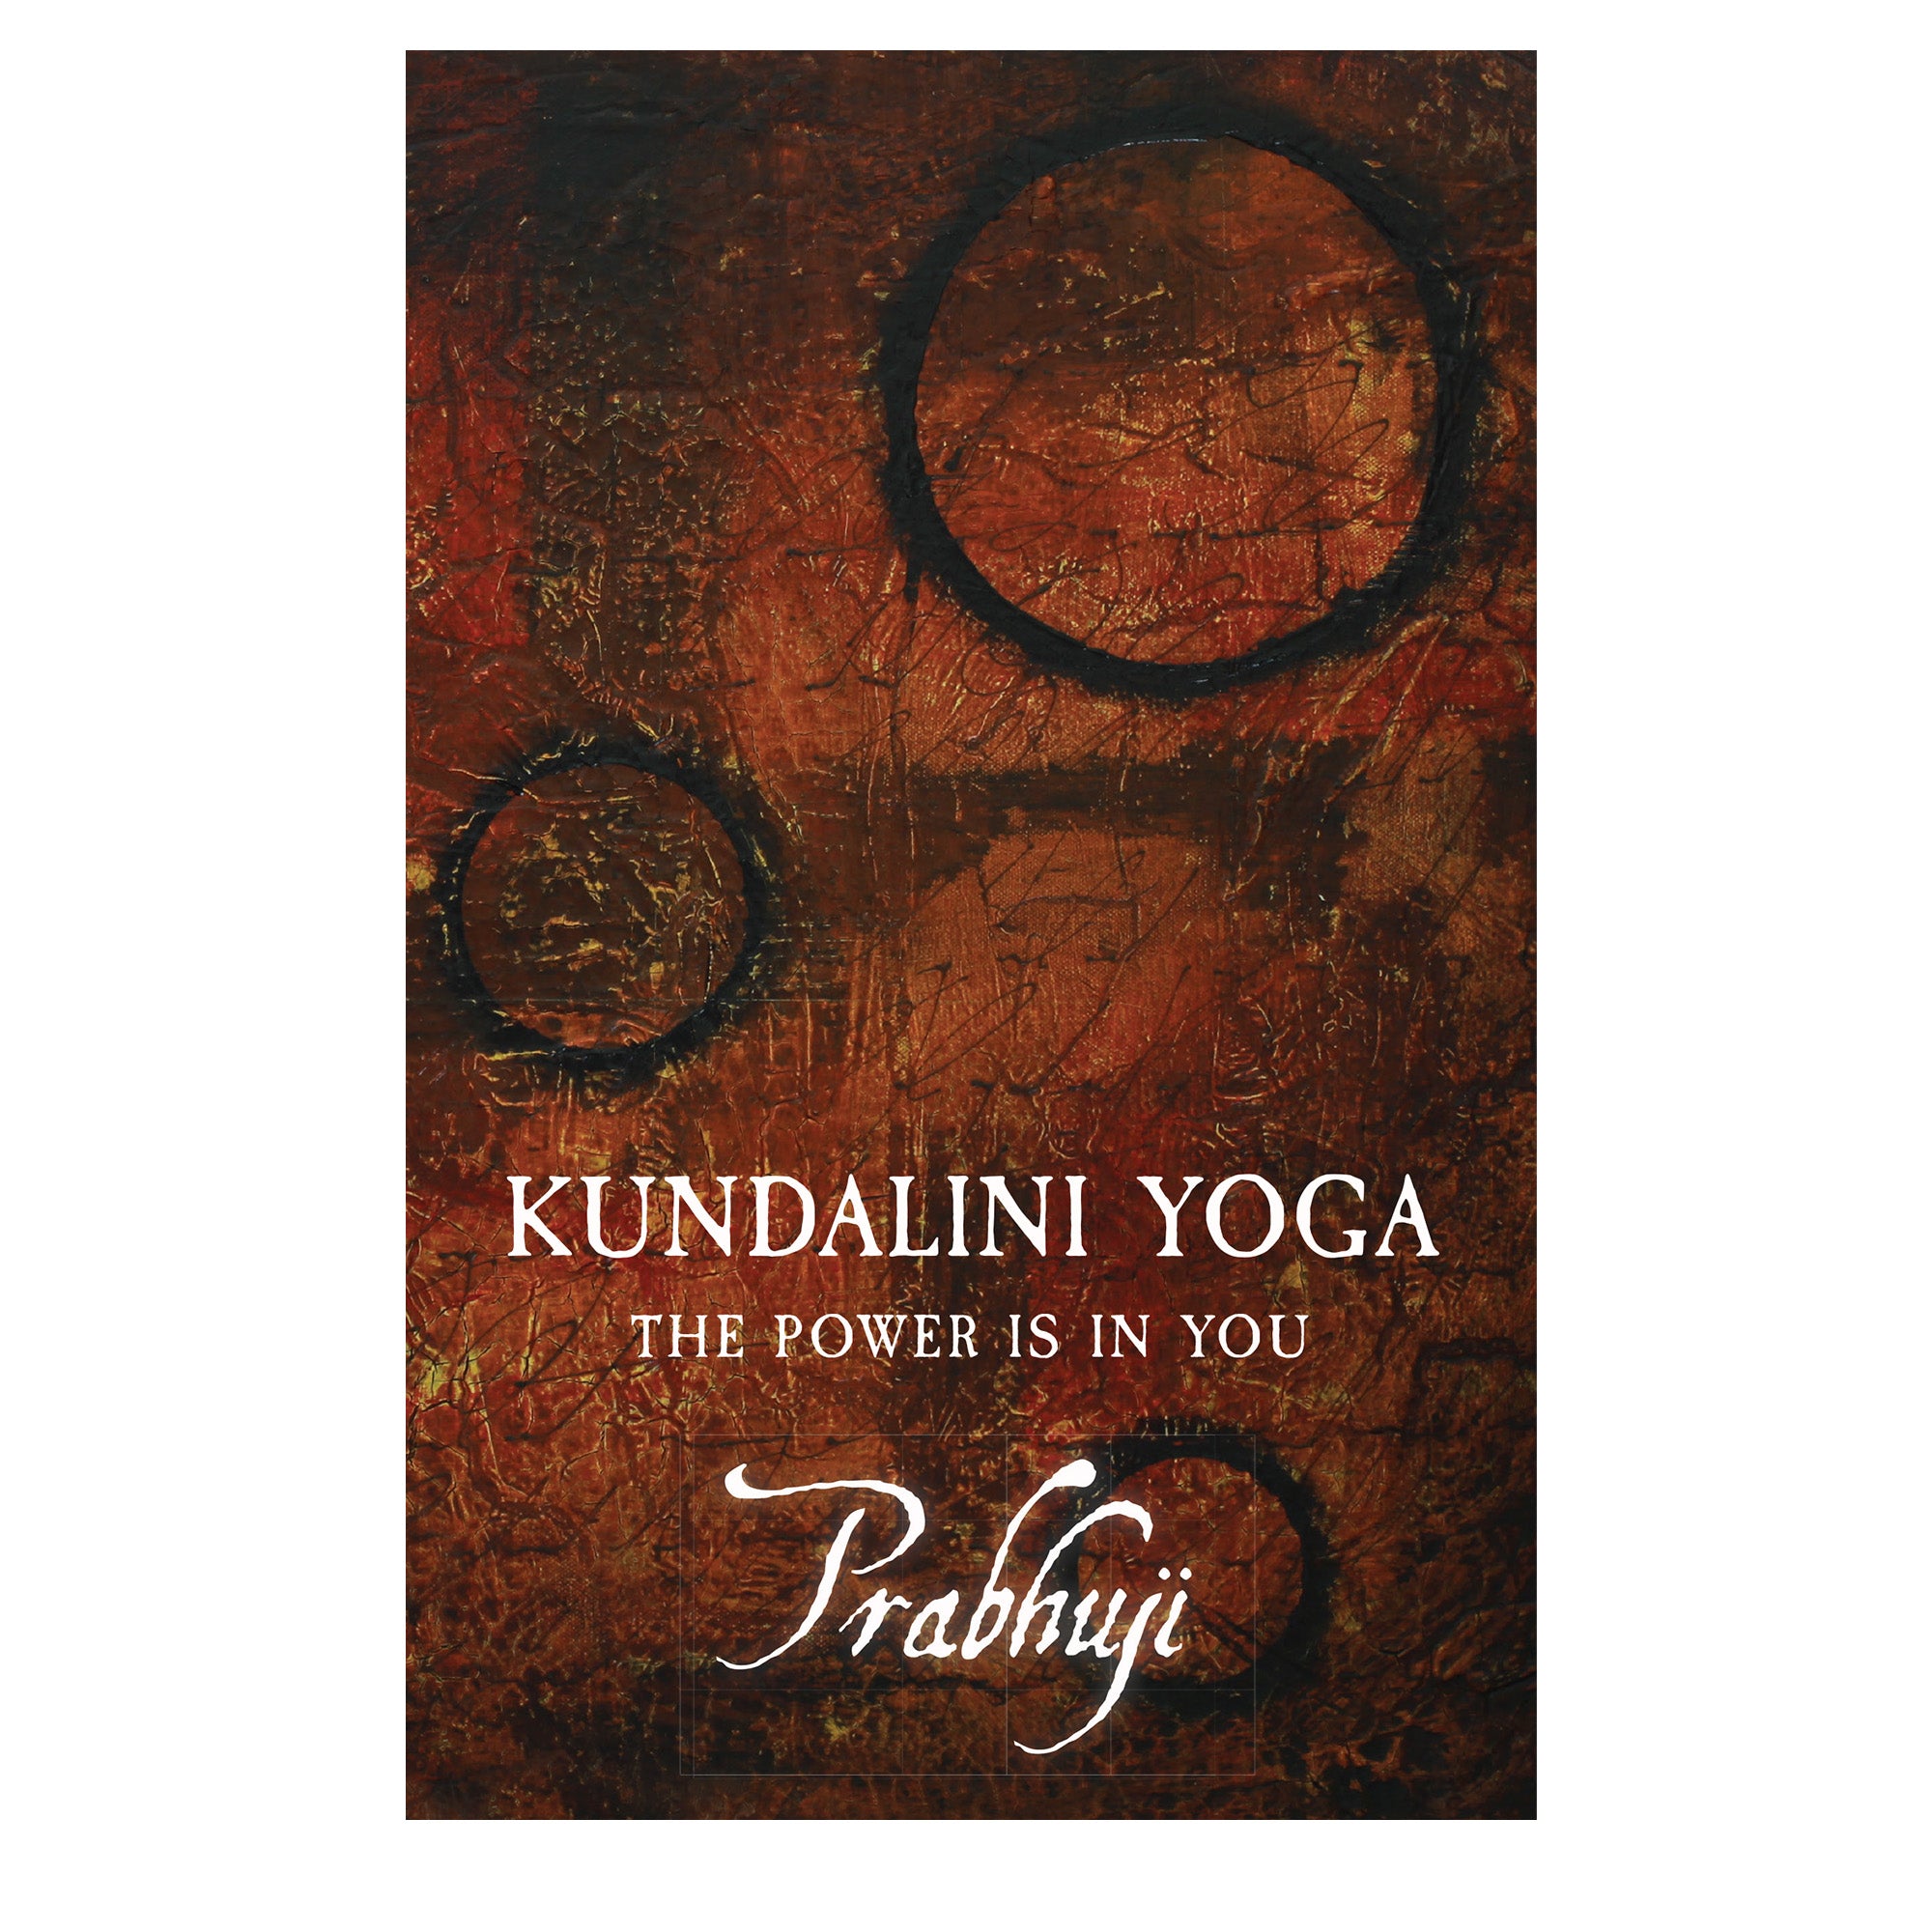 Kundalini yoga - the power is in you by Prabhuji (Paperback - English ...